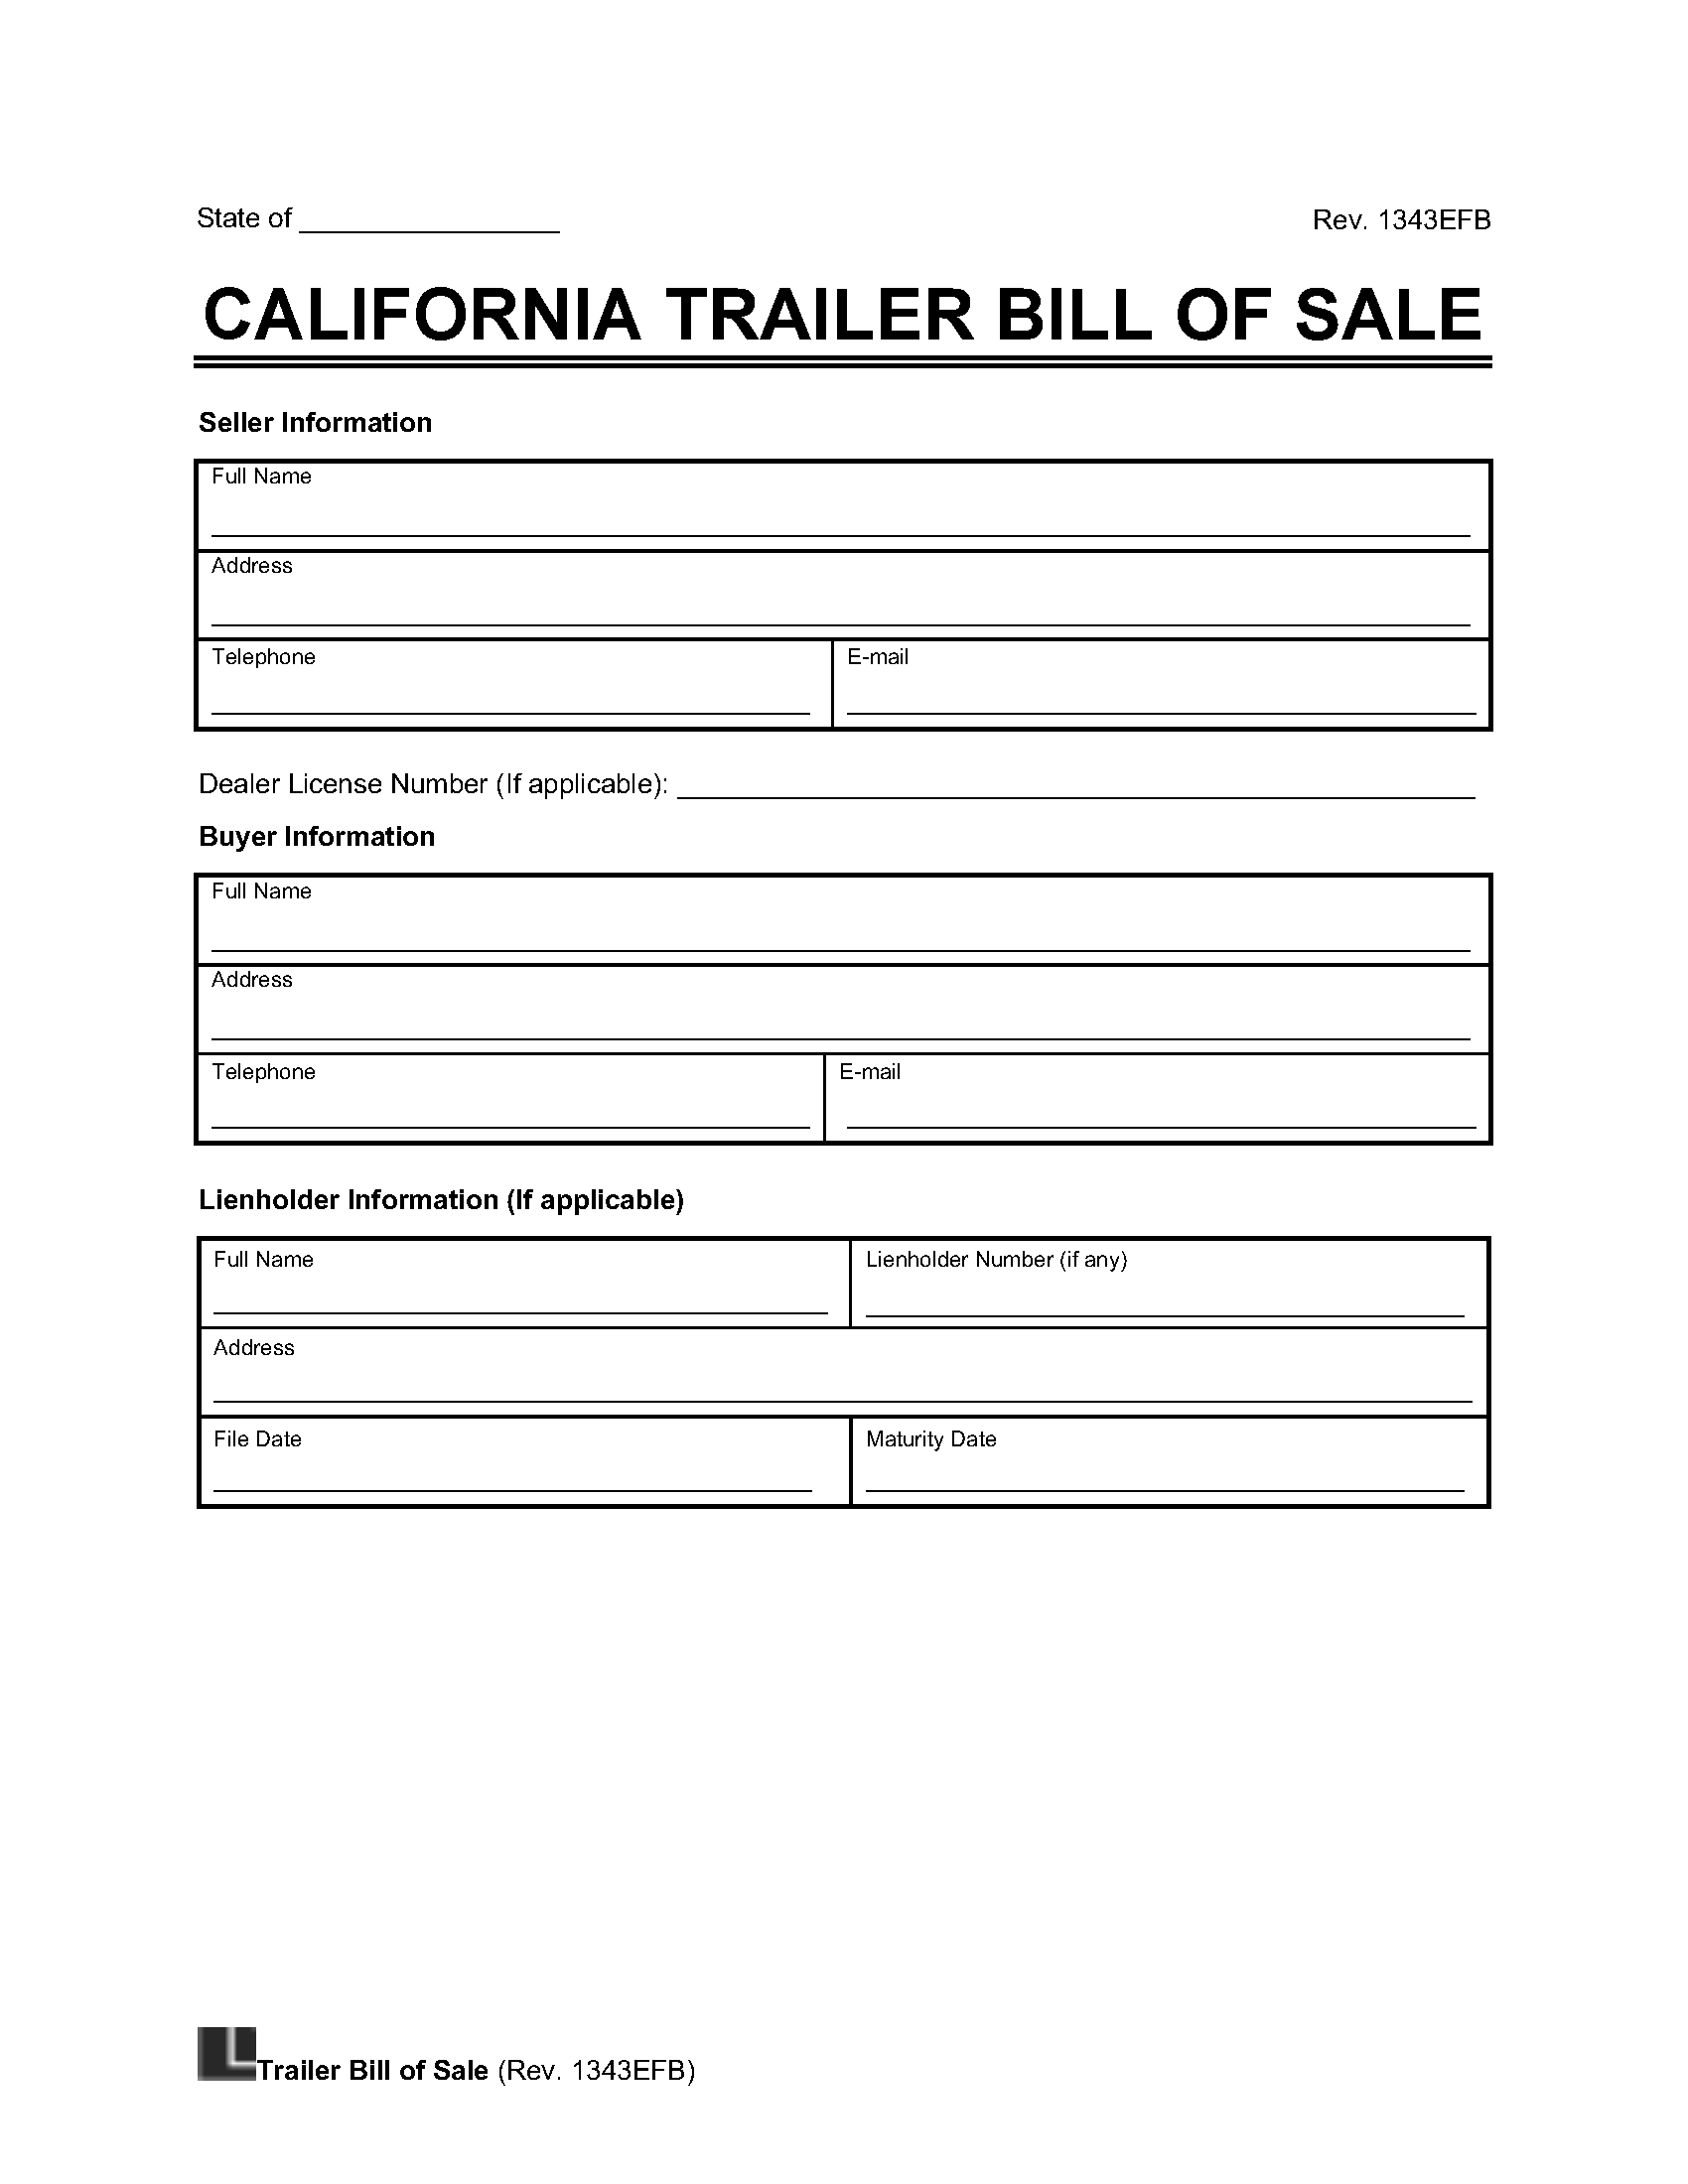 California Trailer Bill of Sale screenshot